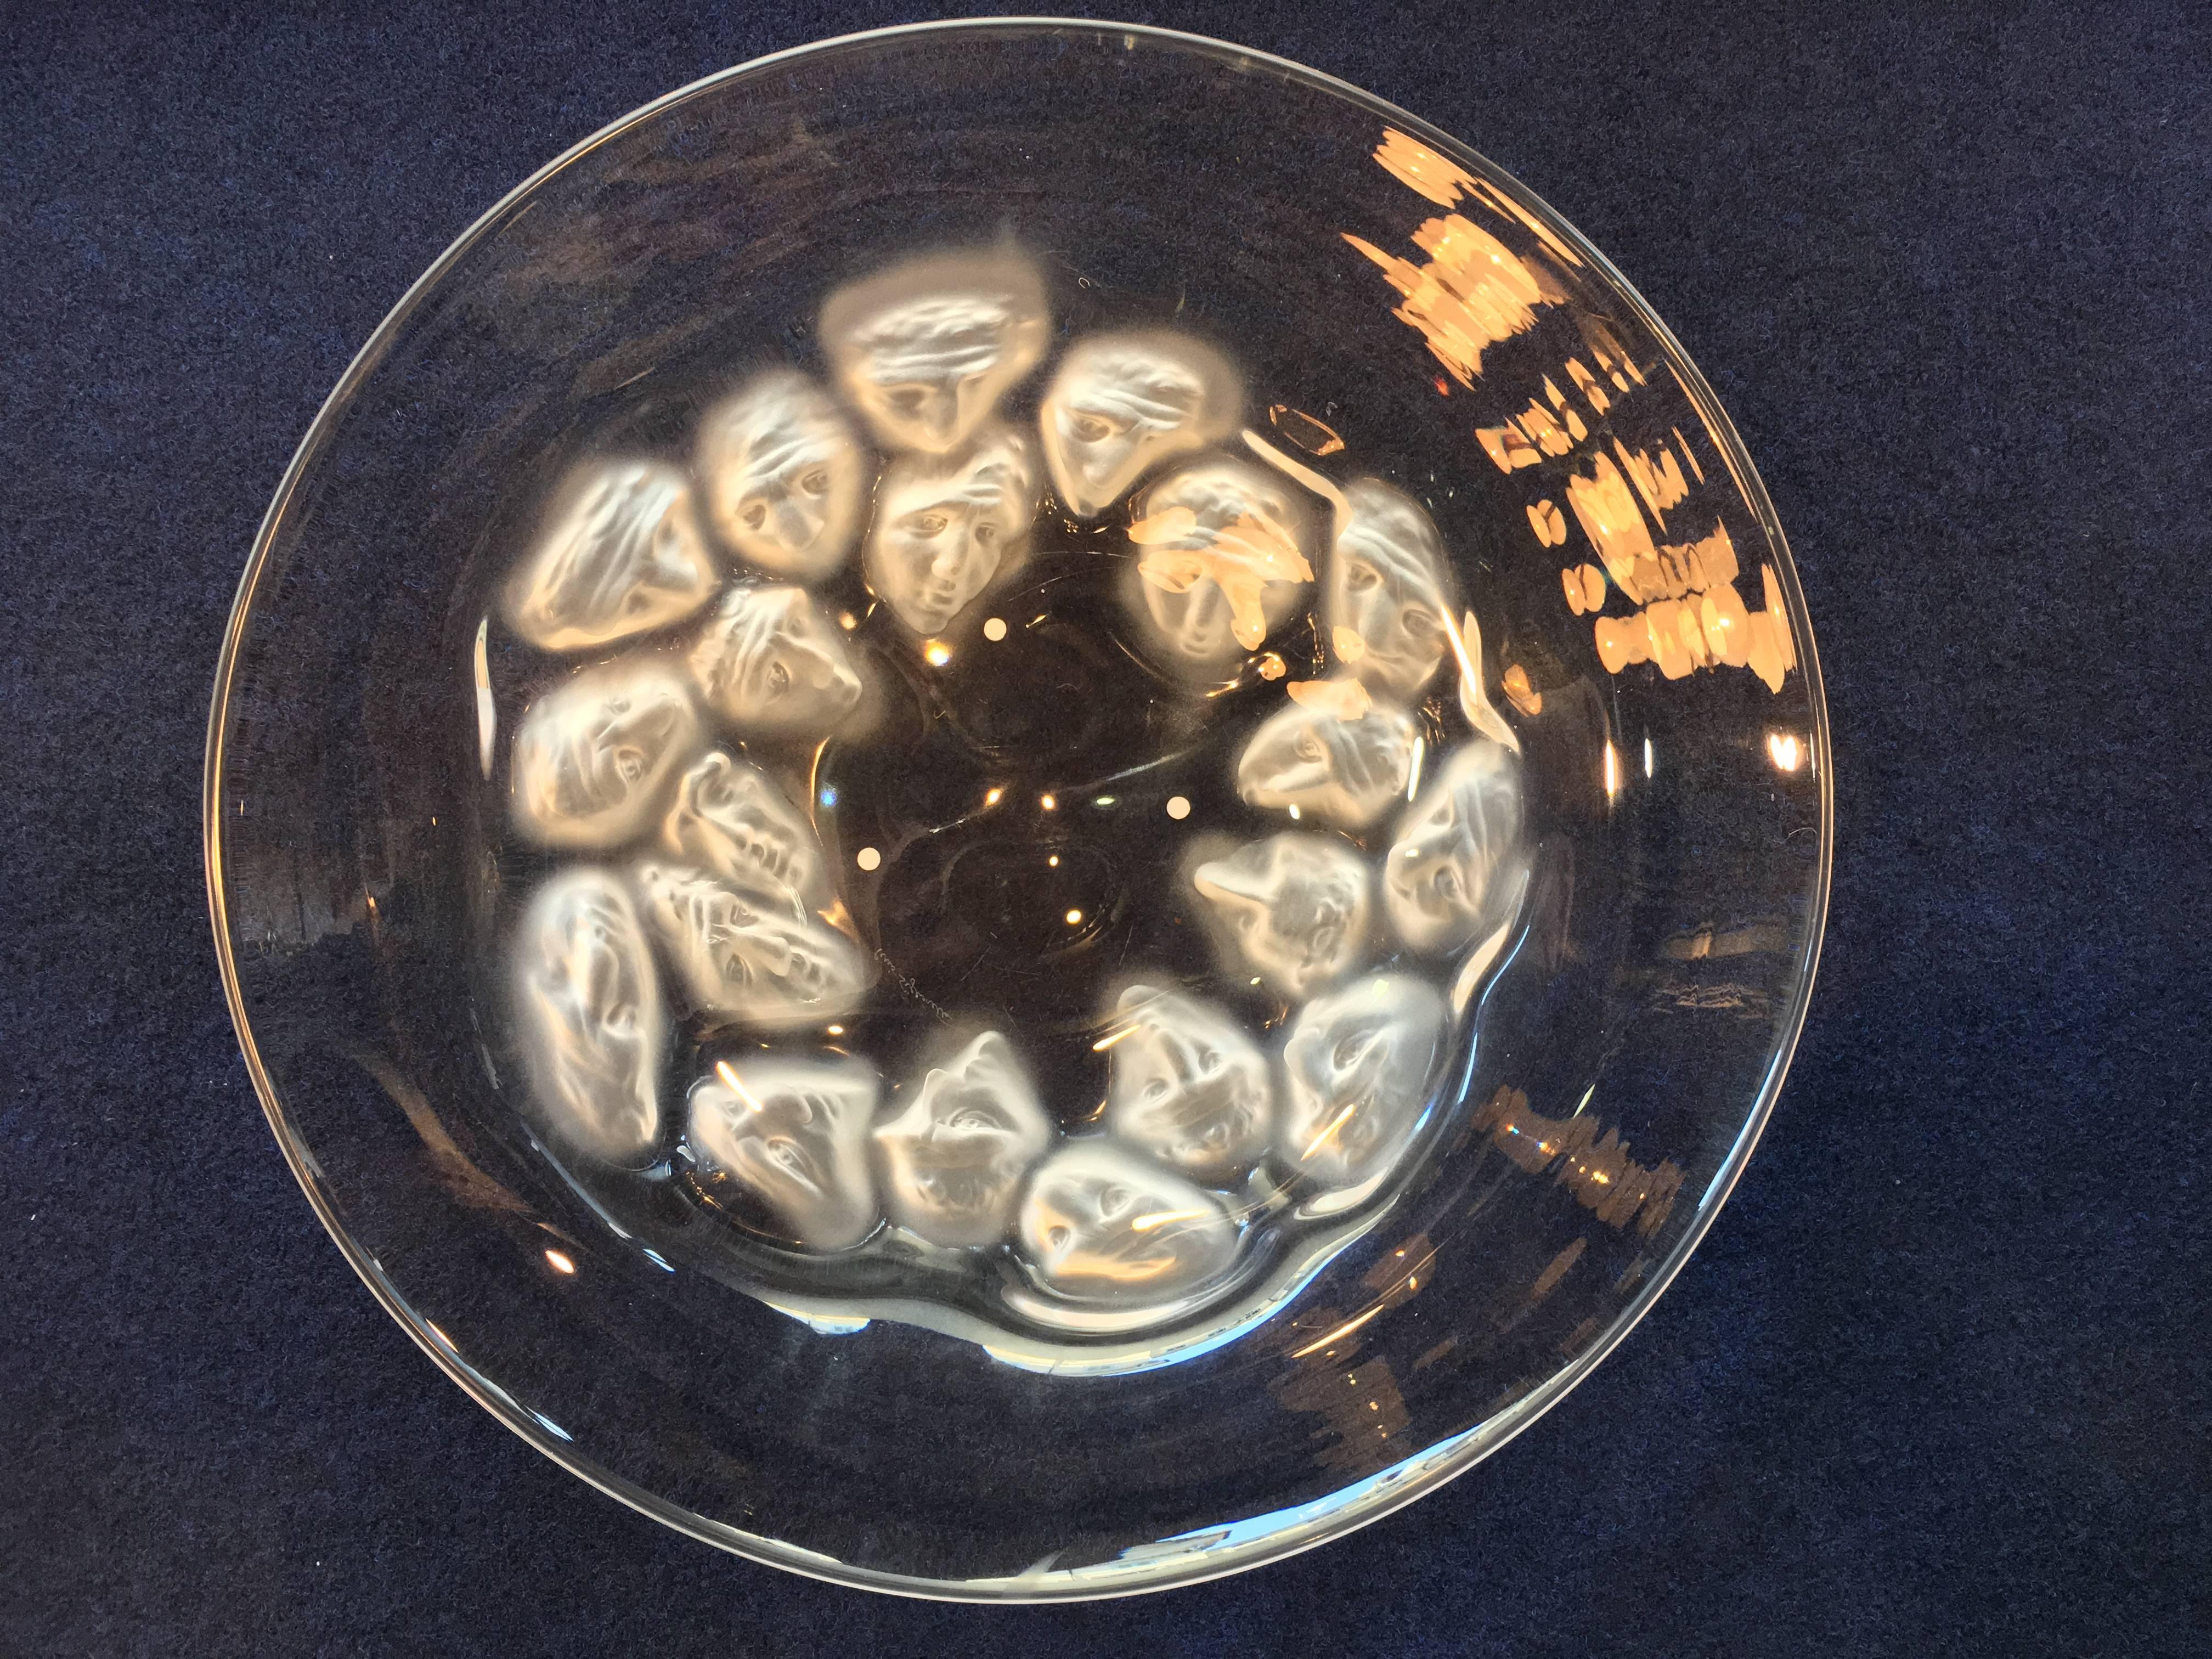 Wonderful glass dish with faces
Blown glass
Vetreria Signoretto
Murano - Venice
Made in Italy
Signed 